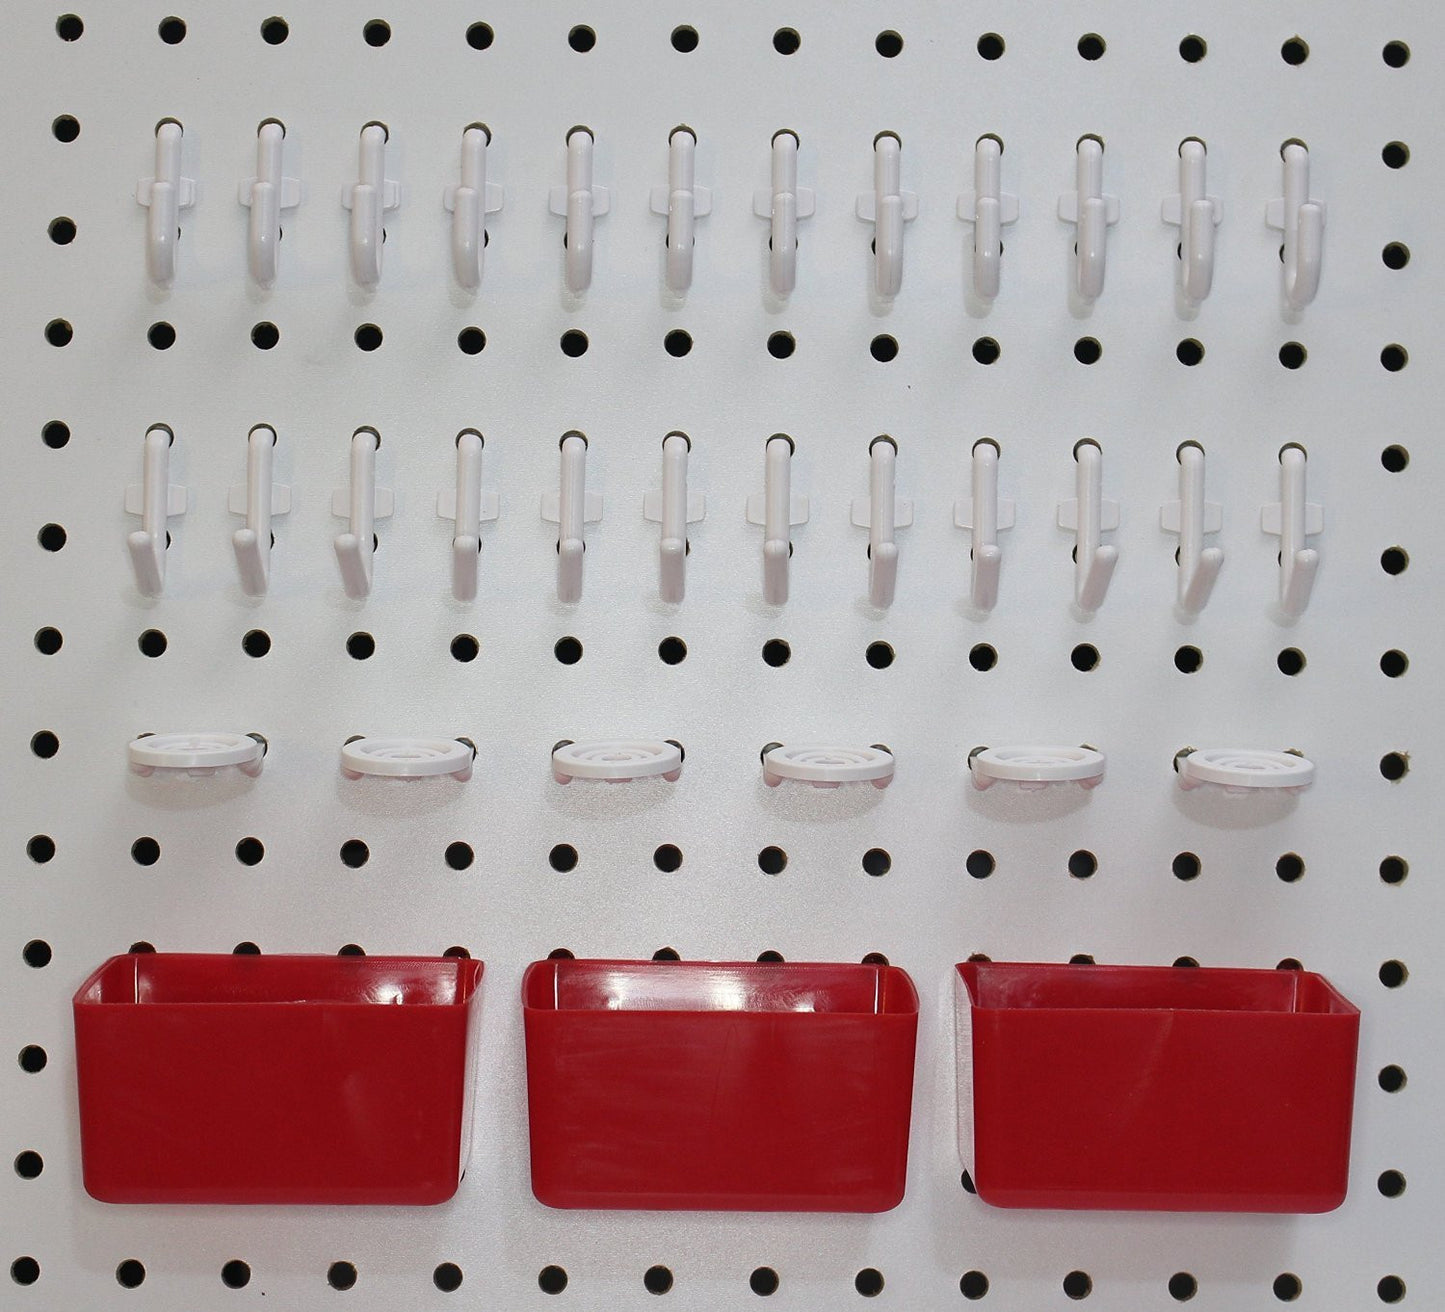 Peg Hook Kit 34 Piece 12 J Hooks & 12 L Hook & 6 Tool Holders & 04 Small Plastic Bins -Free Shipping Peg Board Storage System